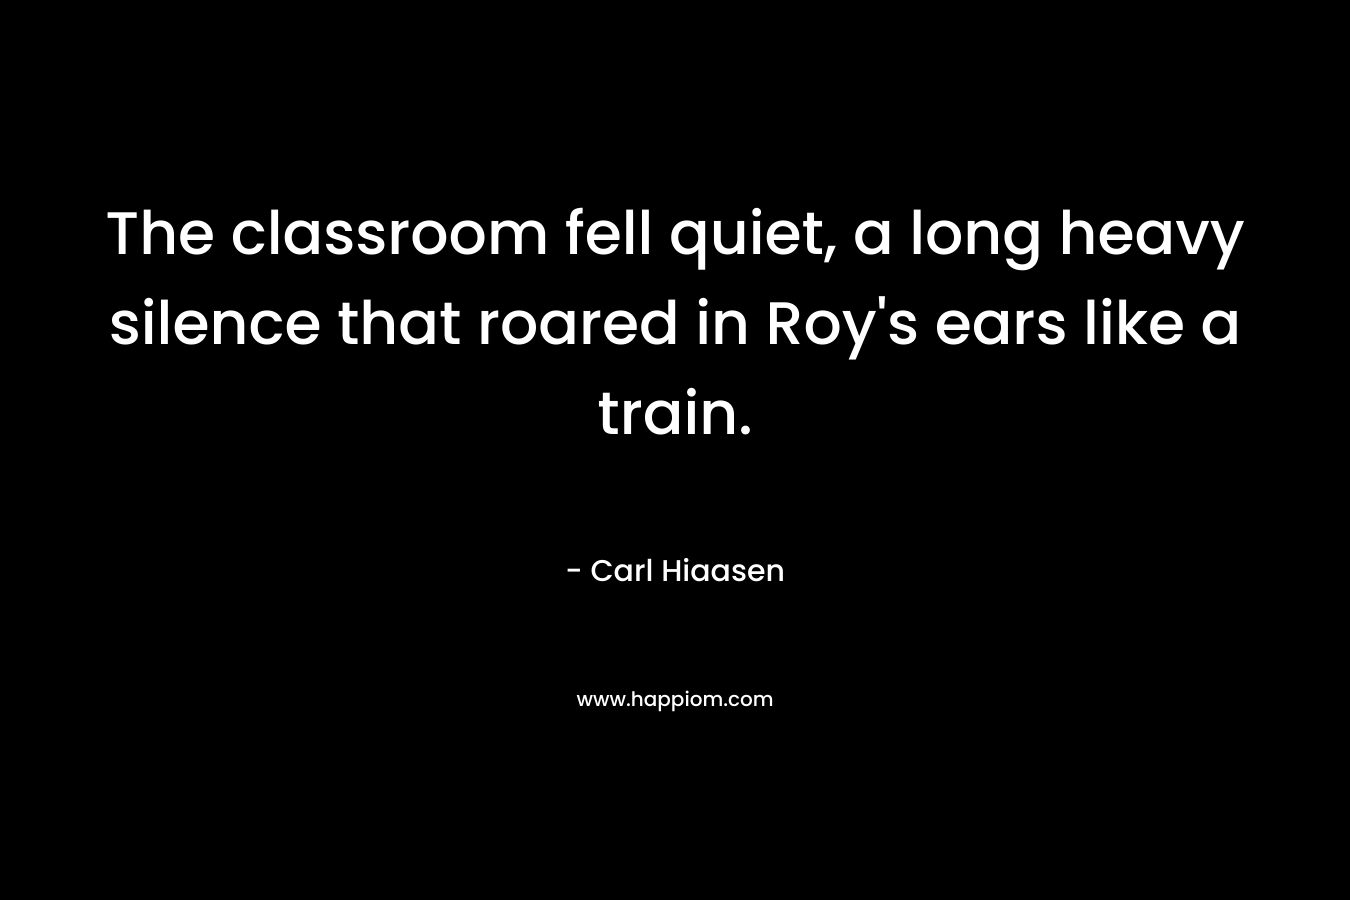 The classroom fell quiet, a long heavy silence that roared in Roy’s ears like a train. – Carl Hiaasen